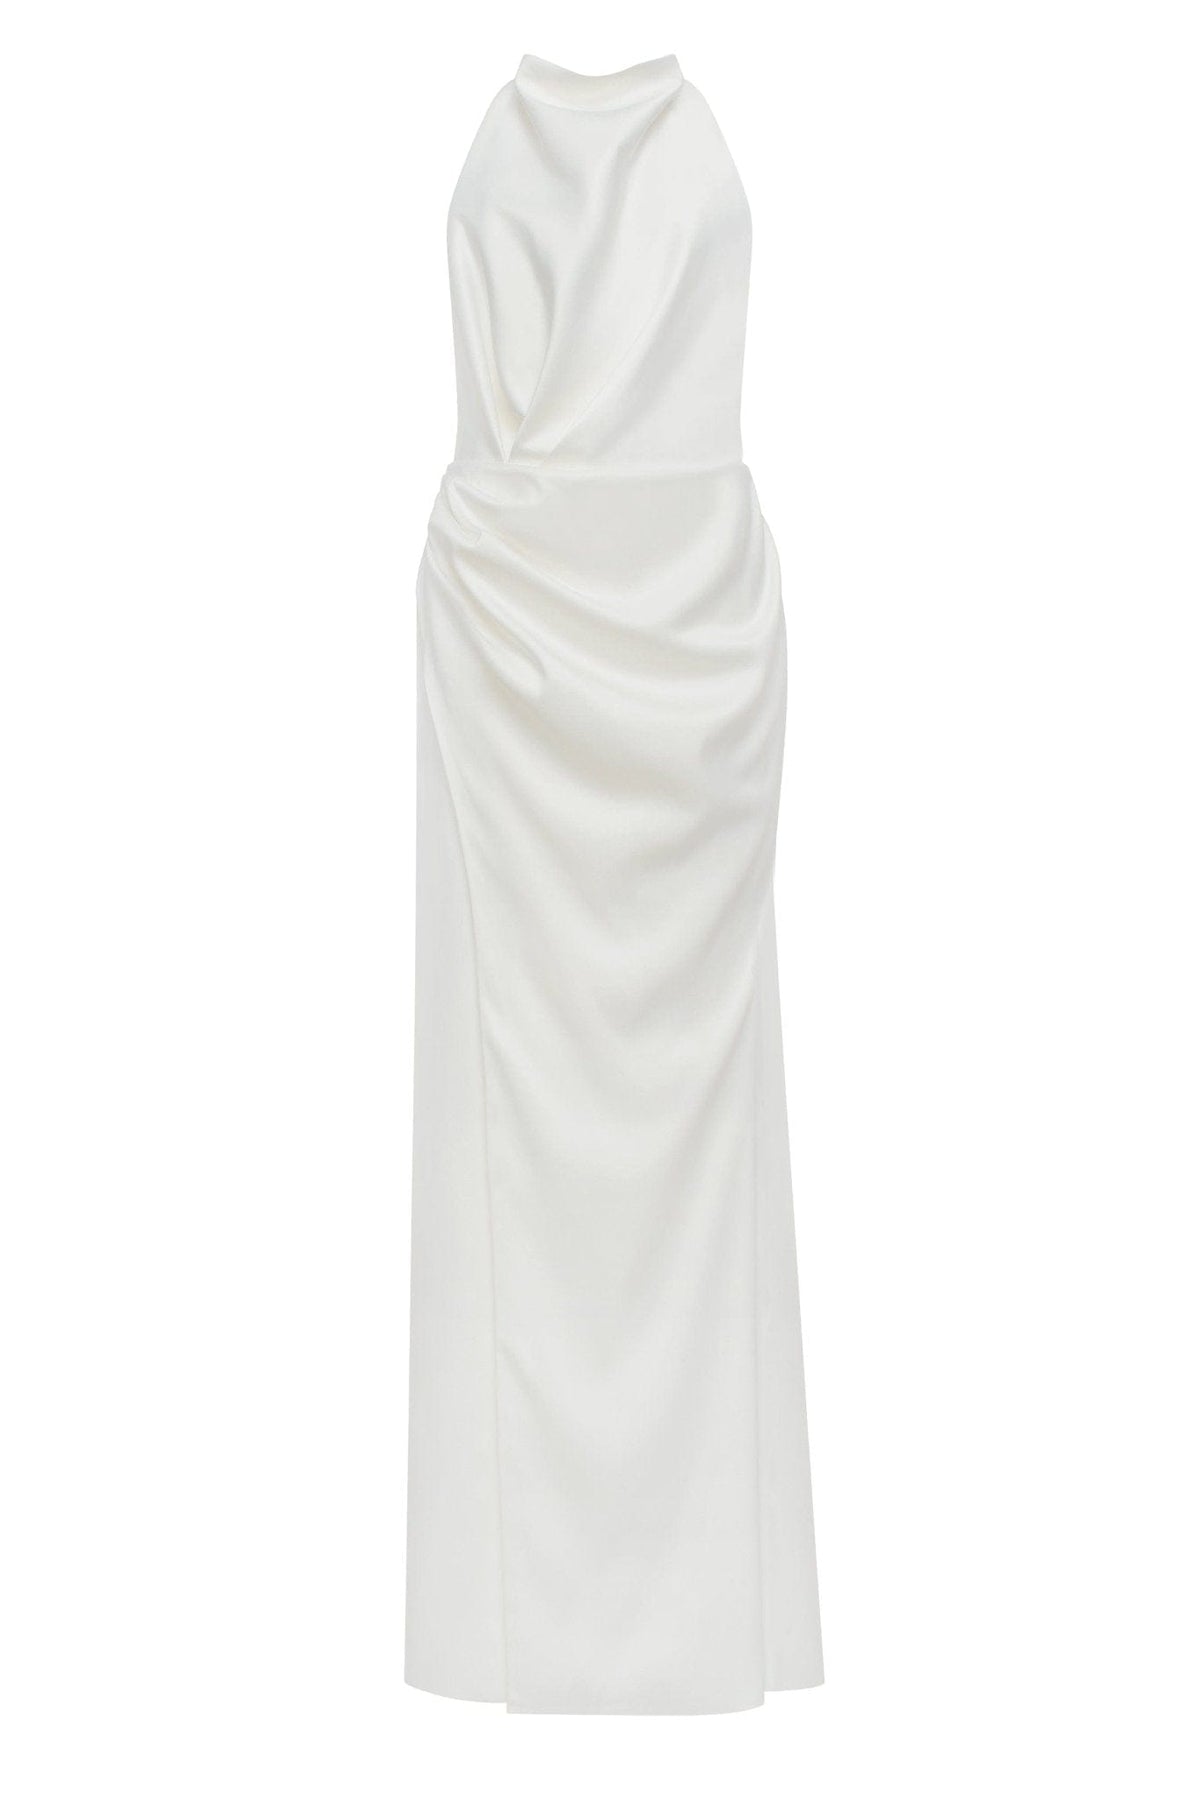 White Mock neck sleeveless low slit dress Milla Dresses - USA ...